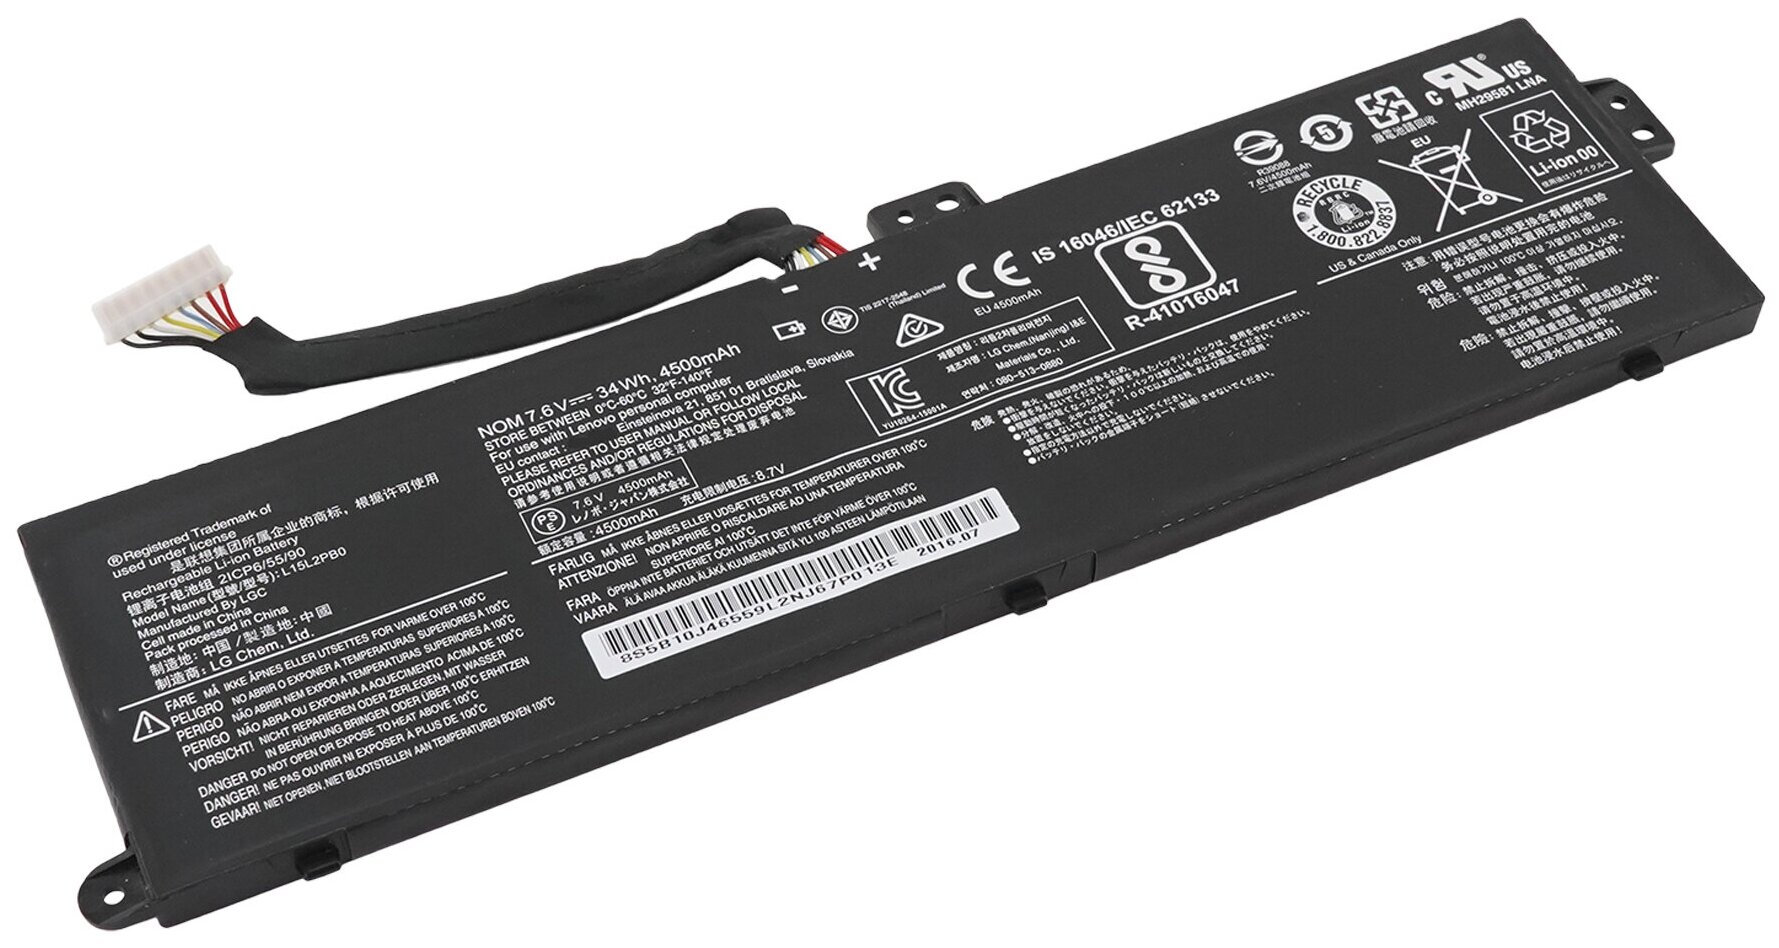 Аккумулятор L15L2PB0 для Lenovo Chromebook 100S